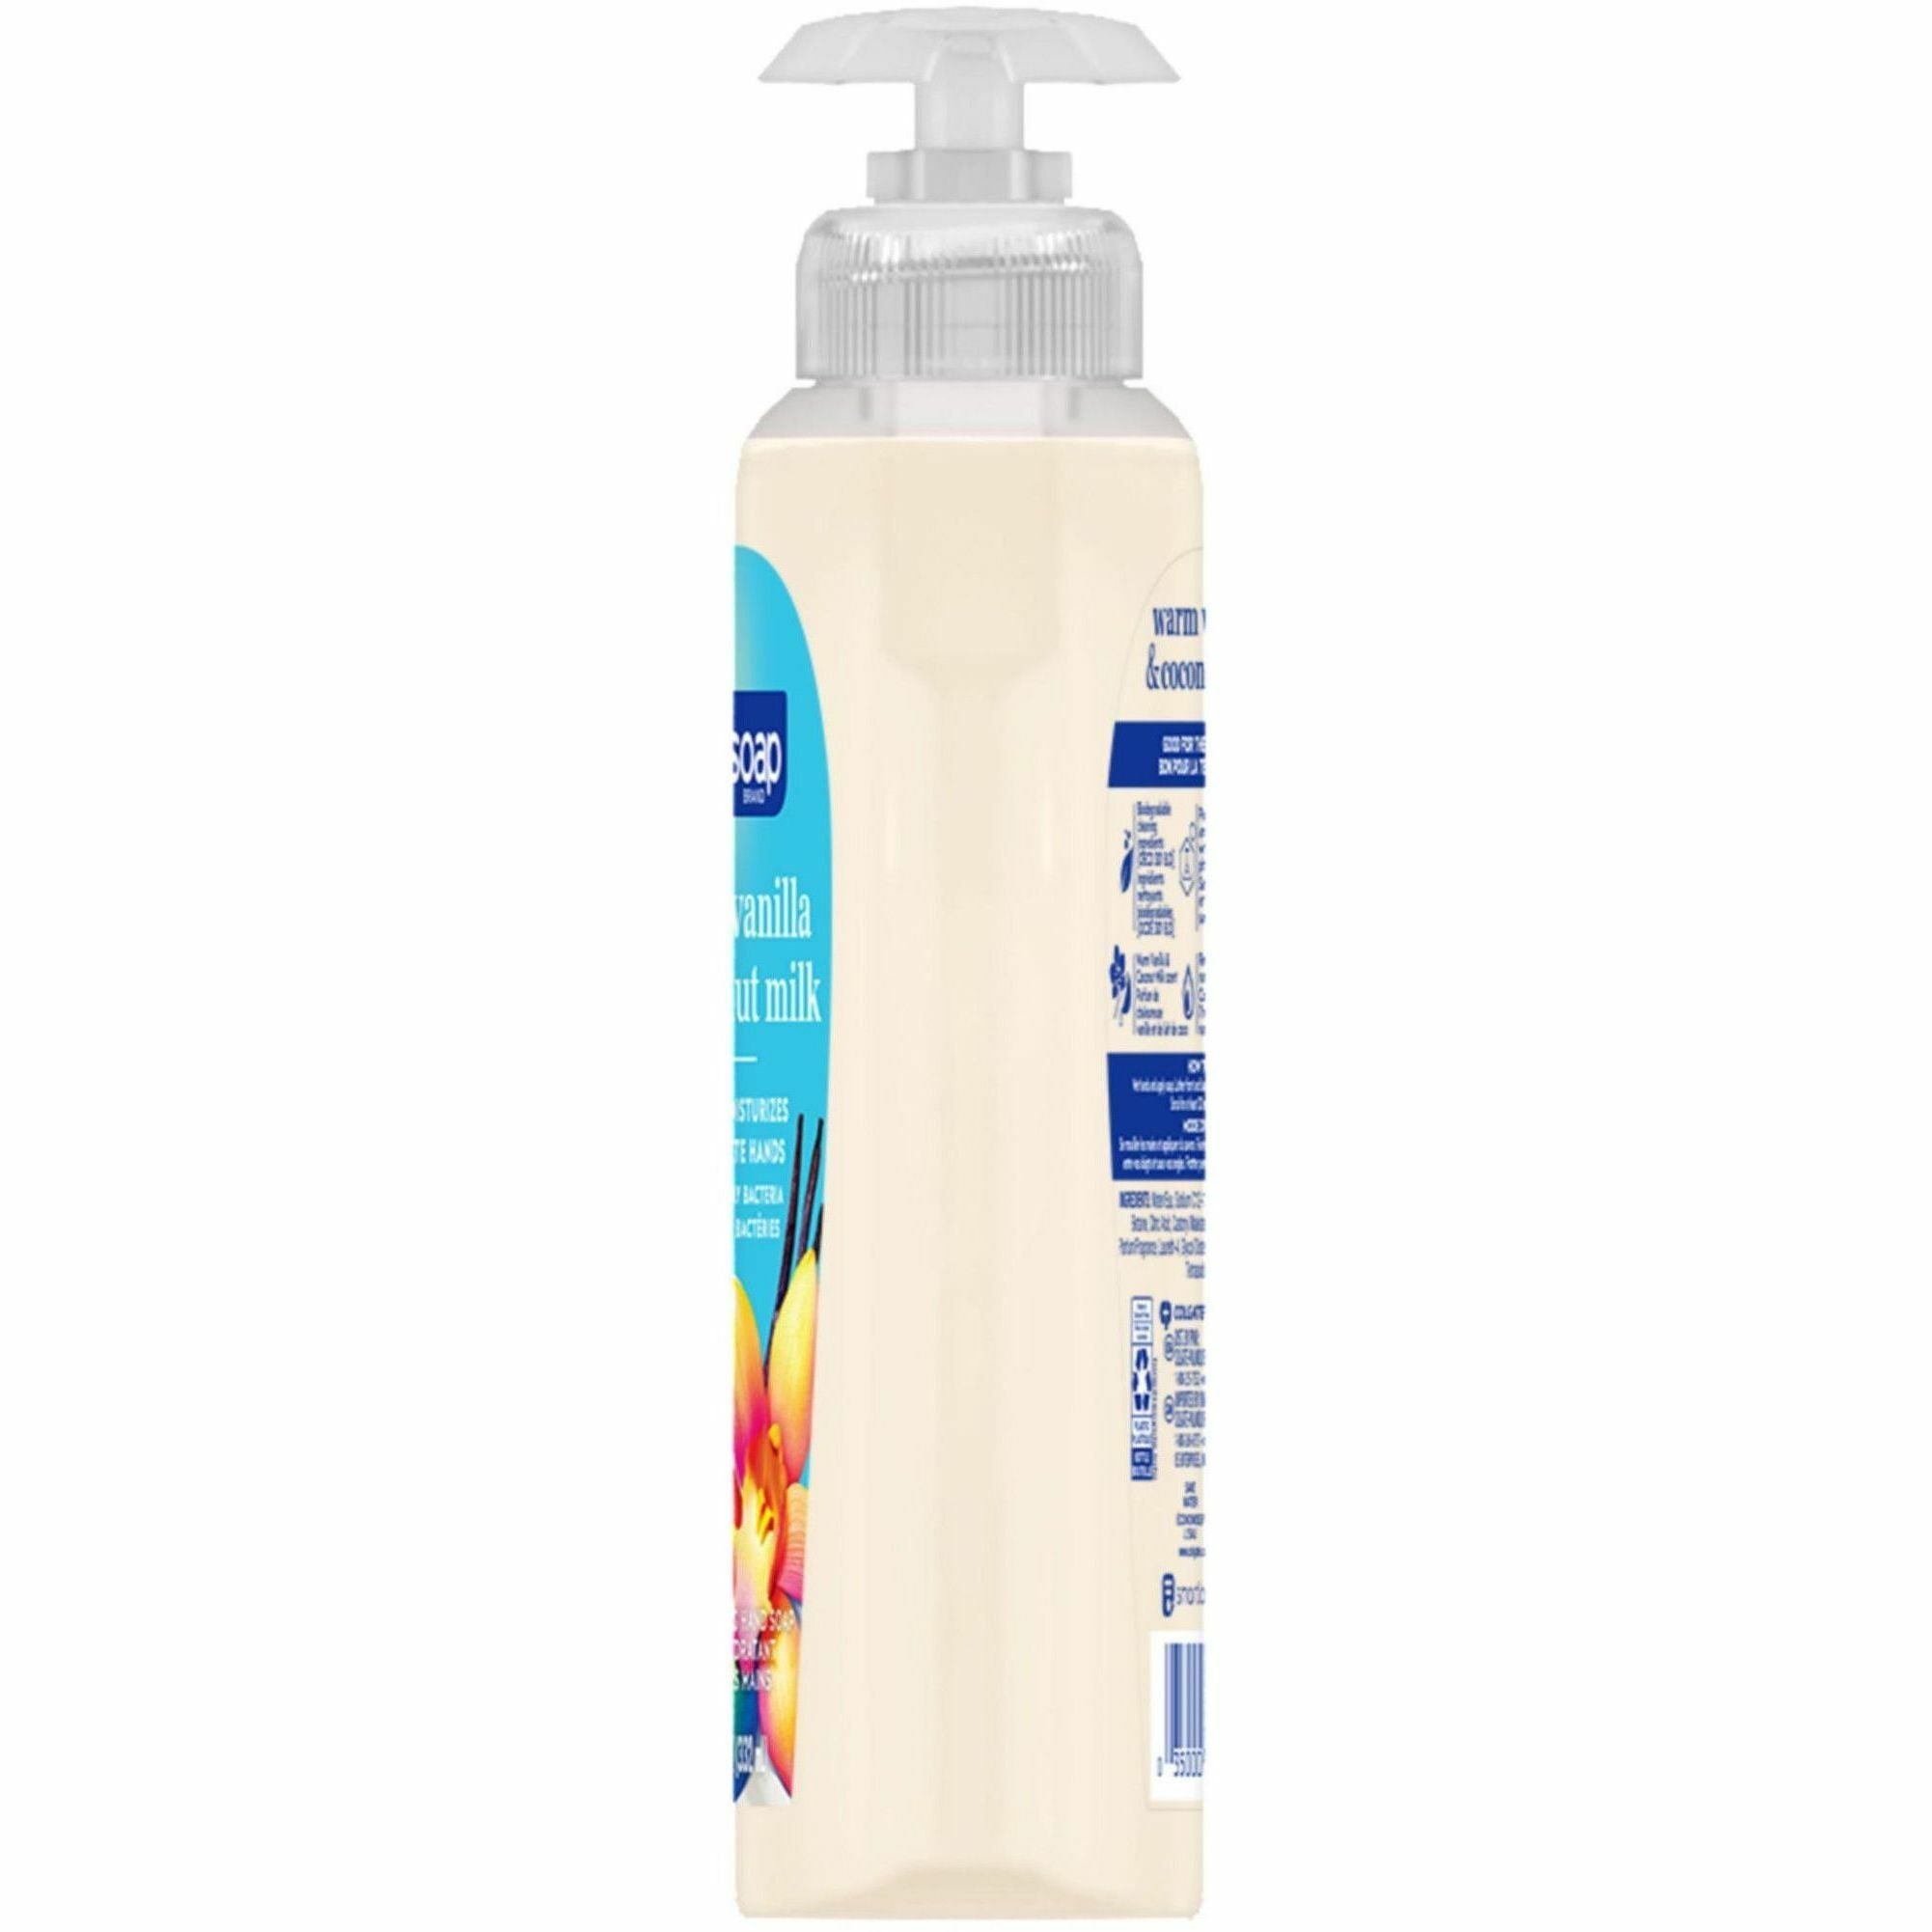 softsoap-warm-vanilla-hand-soap-warm-vanilla-&-coconut-milk-scentfor-113-fl-oz-3327-ml-pump-bottle-dispenser-bacteria-remover-dirt-remover-hand-skin-moisturizing-white-refillable-recyclable-paraben-free-phthalate-free-biodeg_cpcus07059a - 2